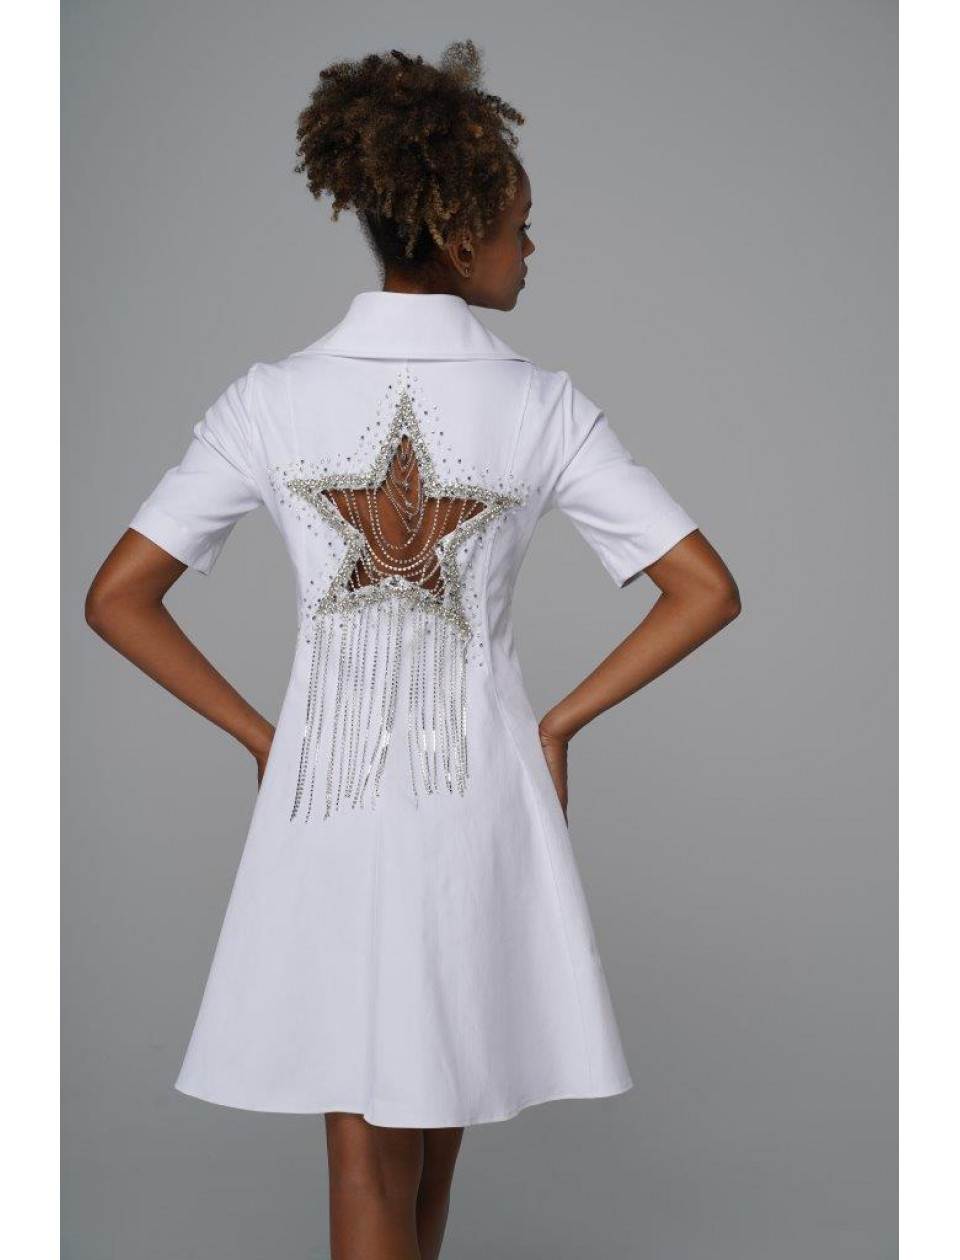 White Star Dress